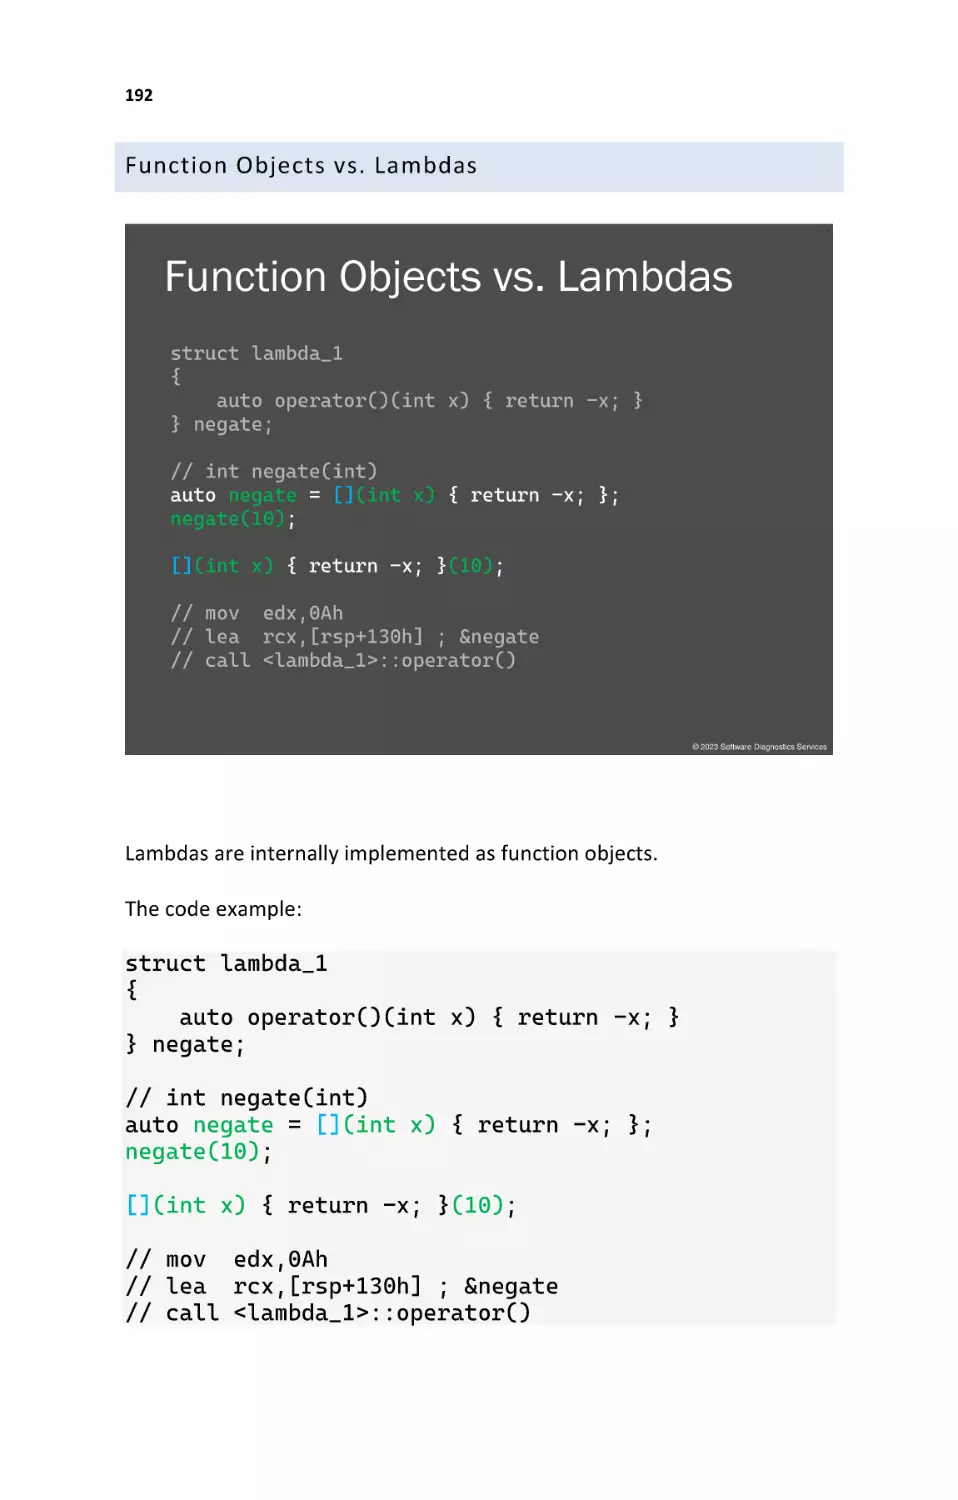 Function Objects vs. Lambdas